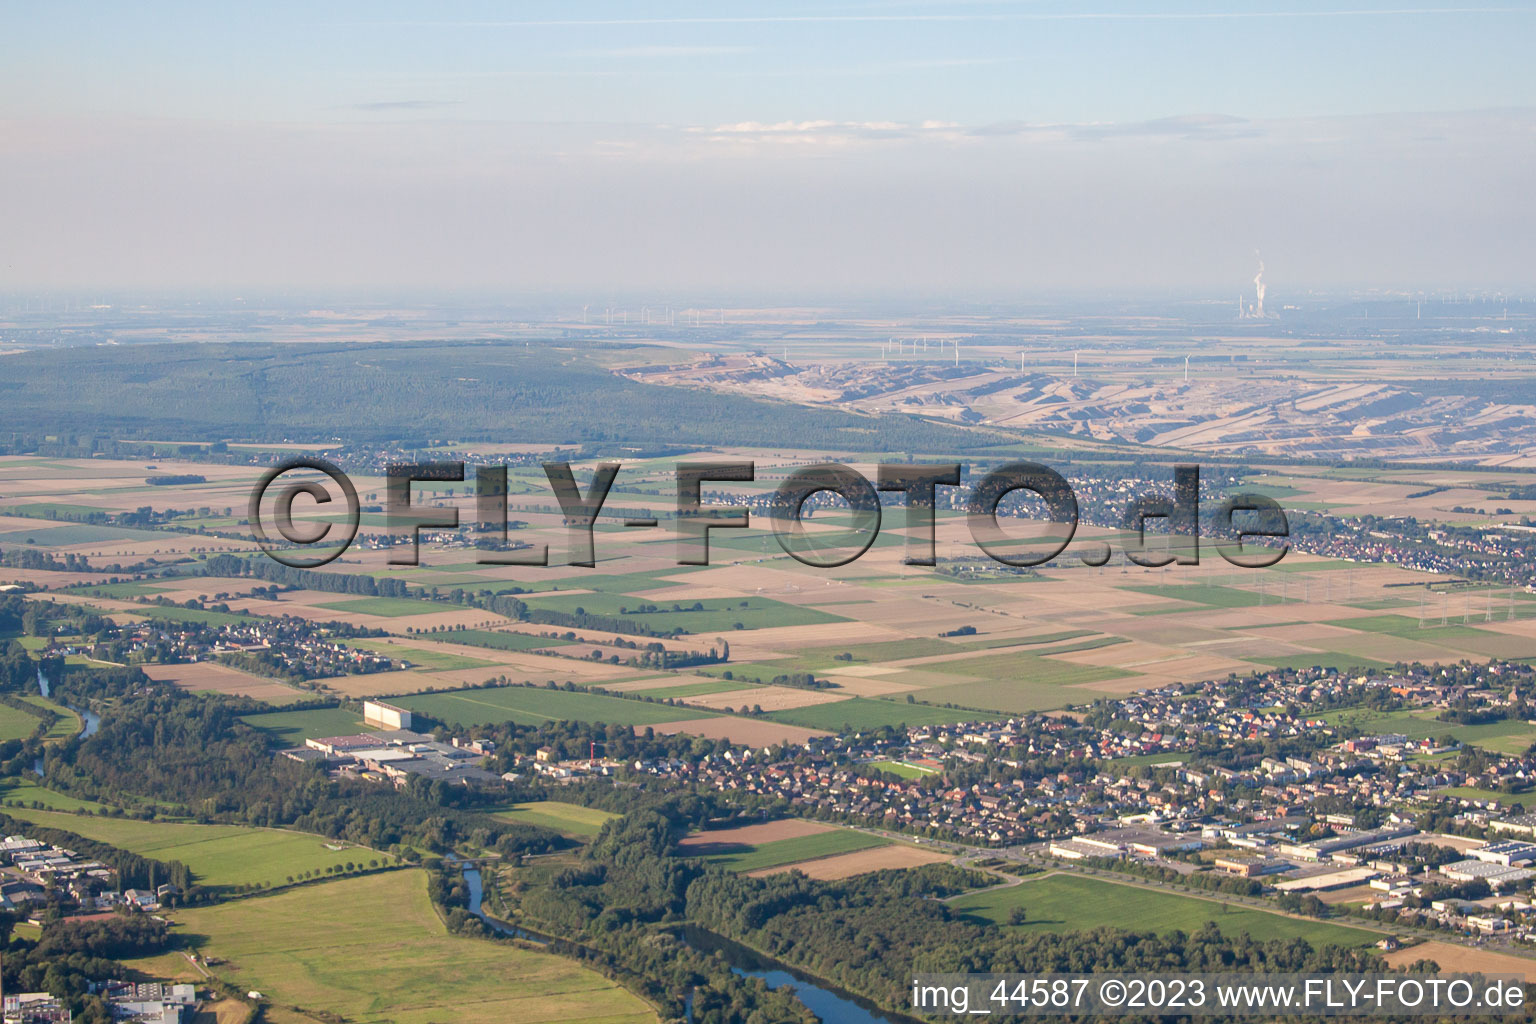 Aerial view of View of Etzweiler in Düren in the state North Rhine-Westphalia, Germany